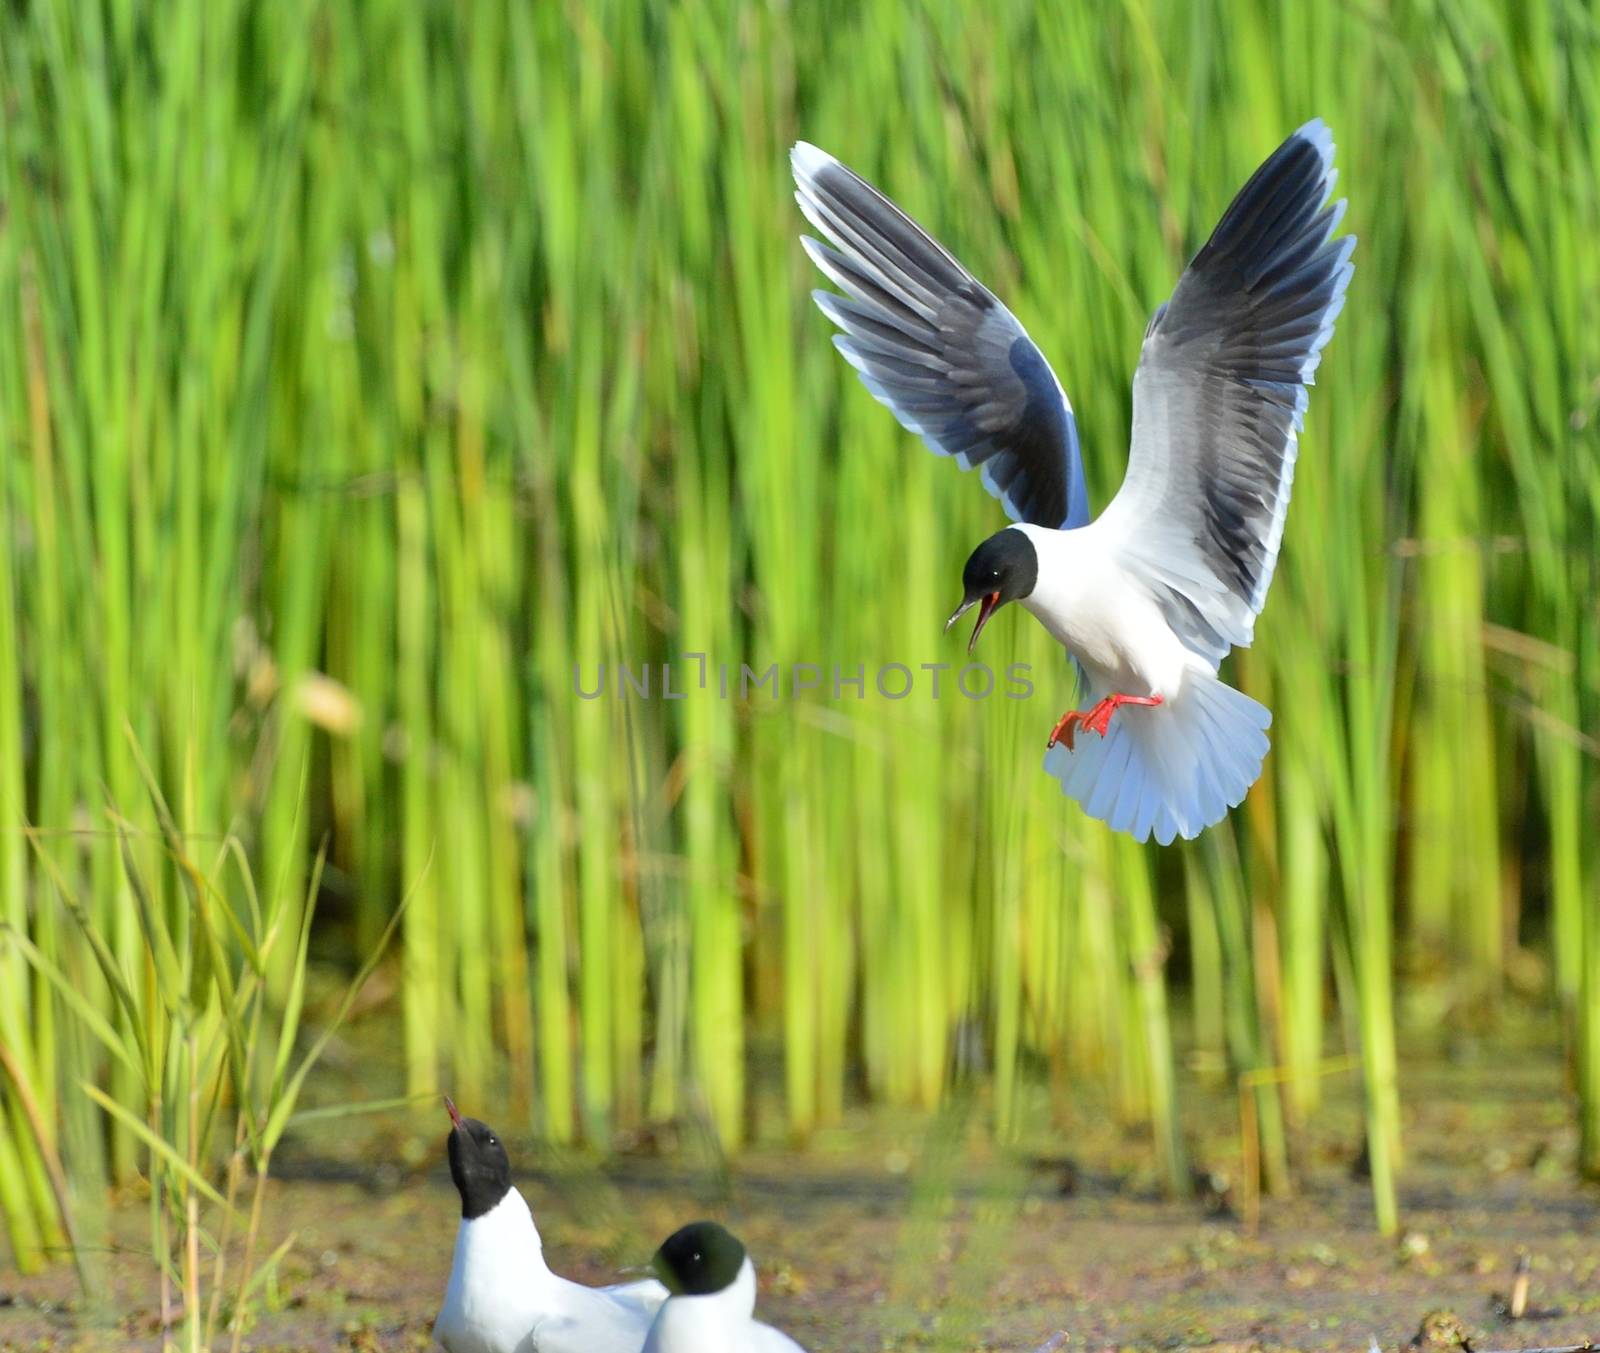 The Little Gull (Larus minutus) in flight by SURZ